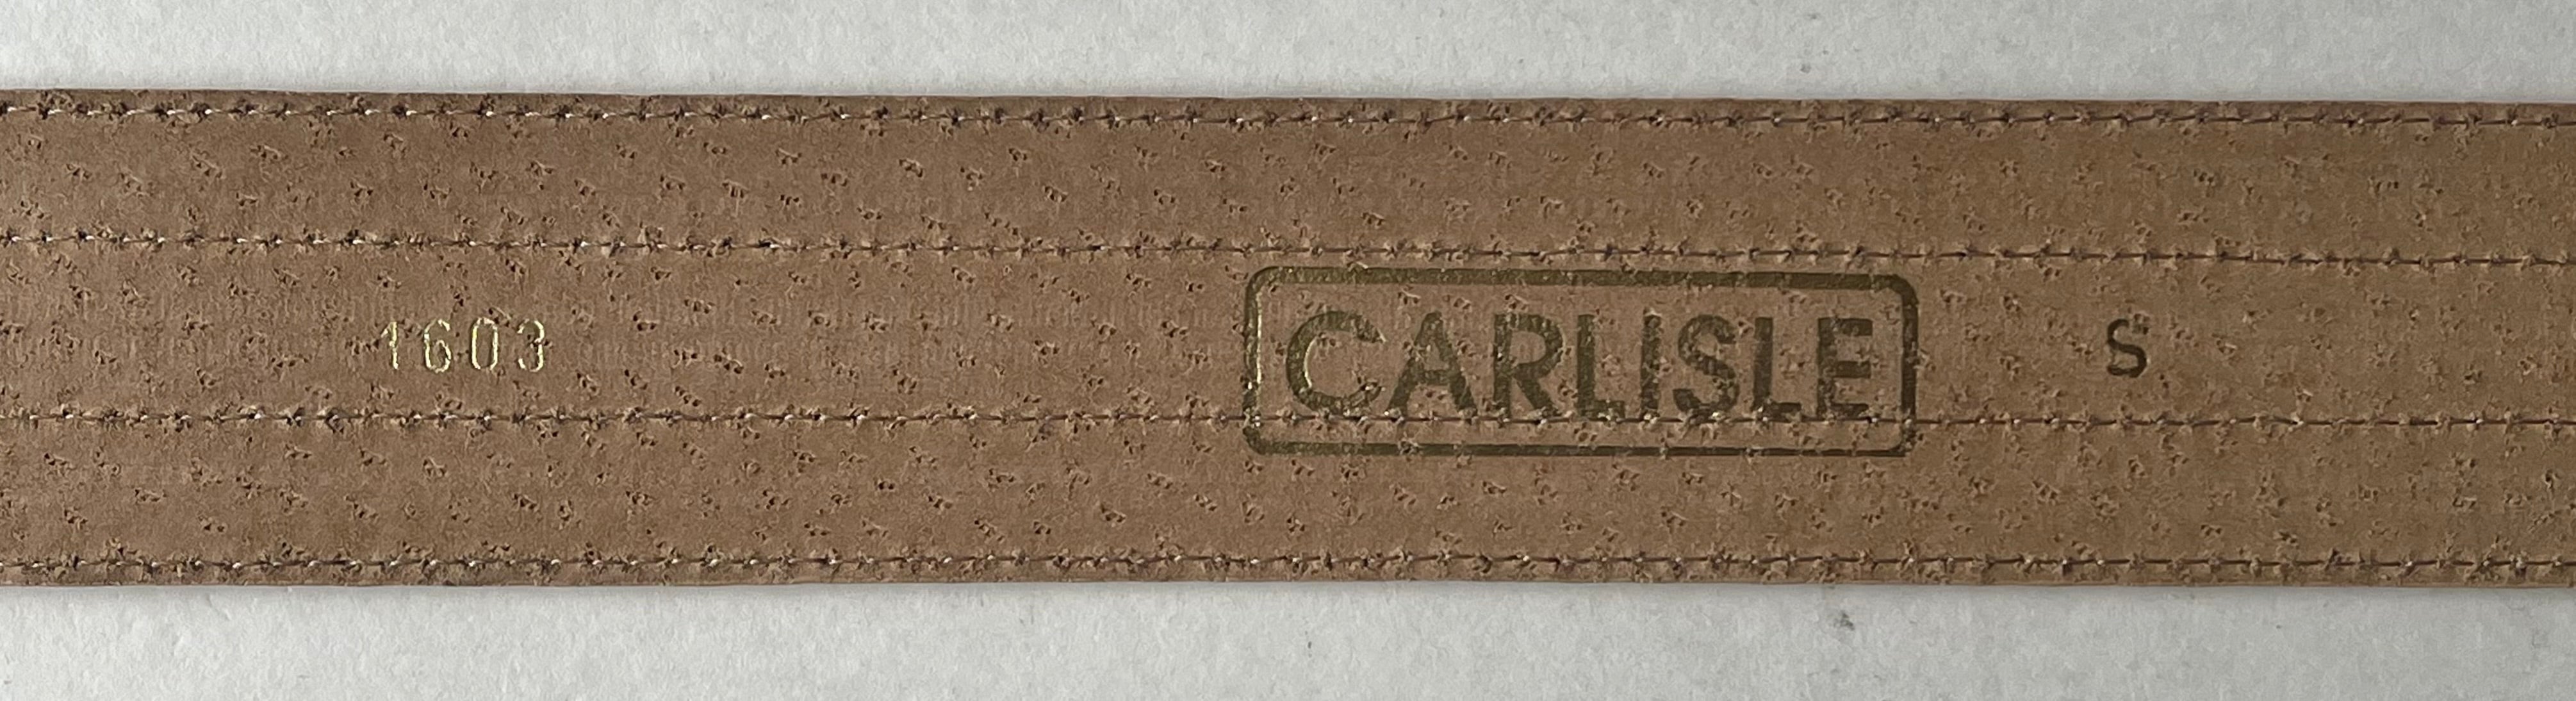 Carlisle Tan/Black Reptile Skin Belt, Size: S